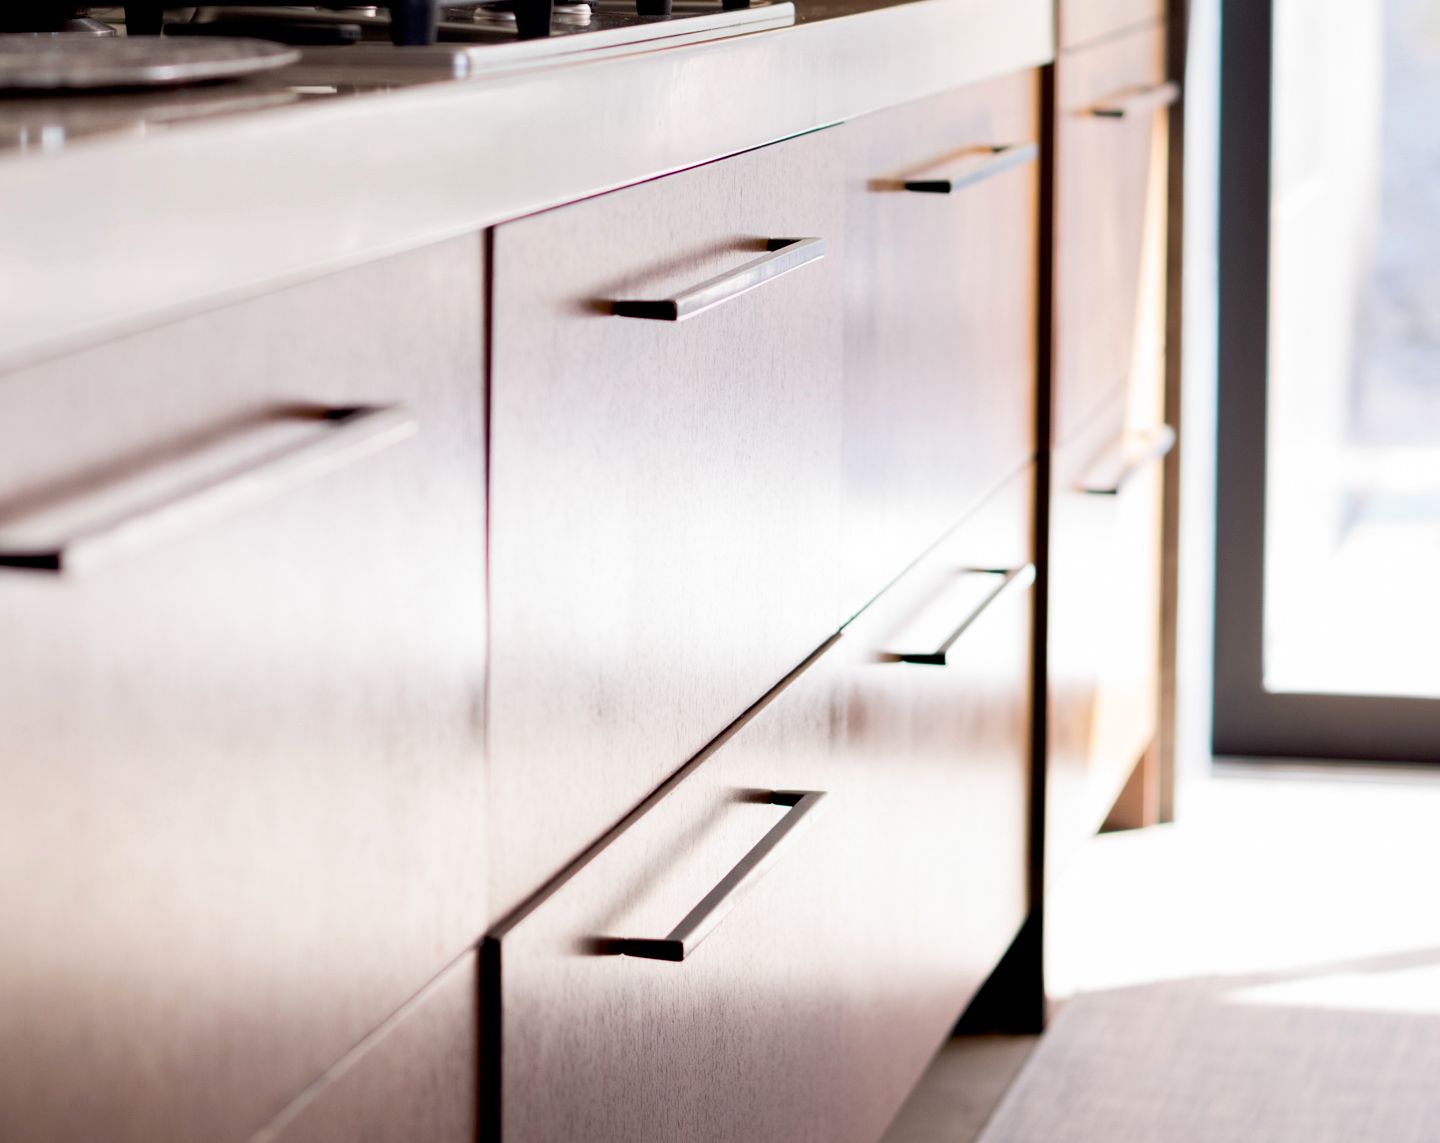 kitchen cabinet drawers